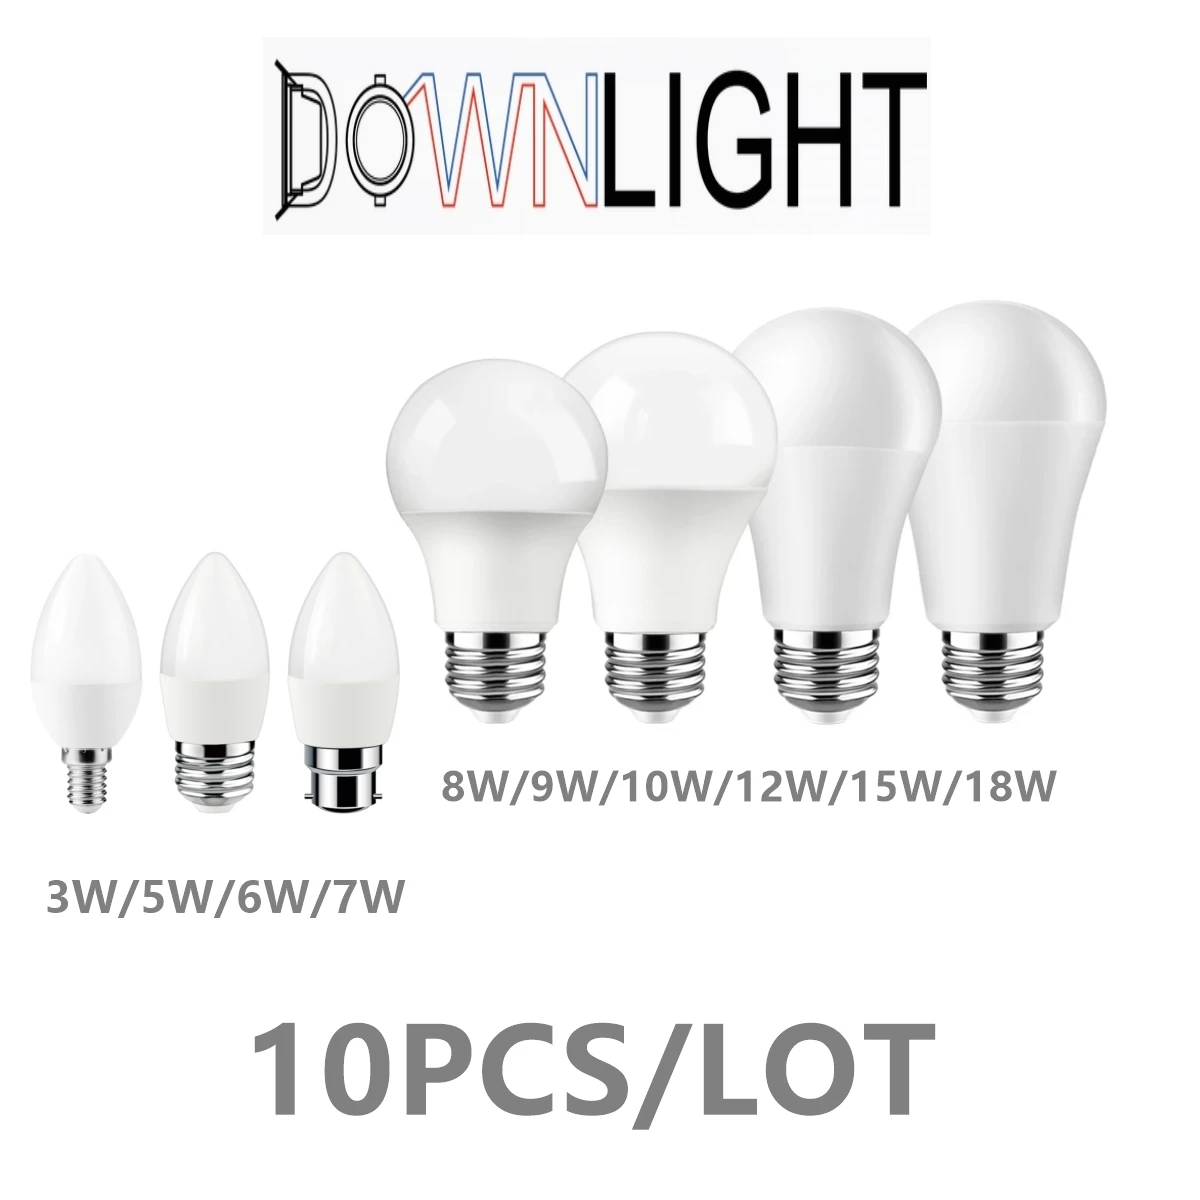 Factory promotion LED bulb lamp candle lamp high lumen warm white light 220V 3W-18W E27 E14 B22  for kitchen living room study